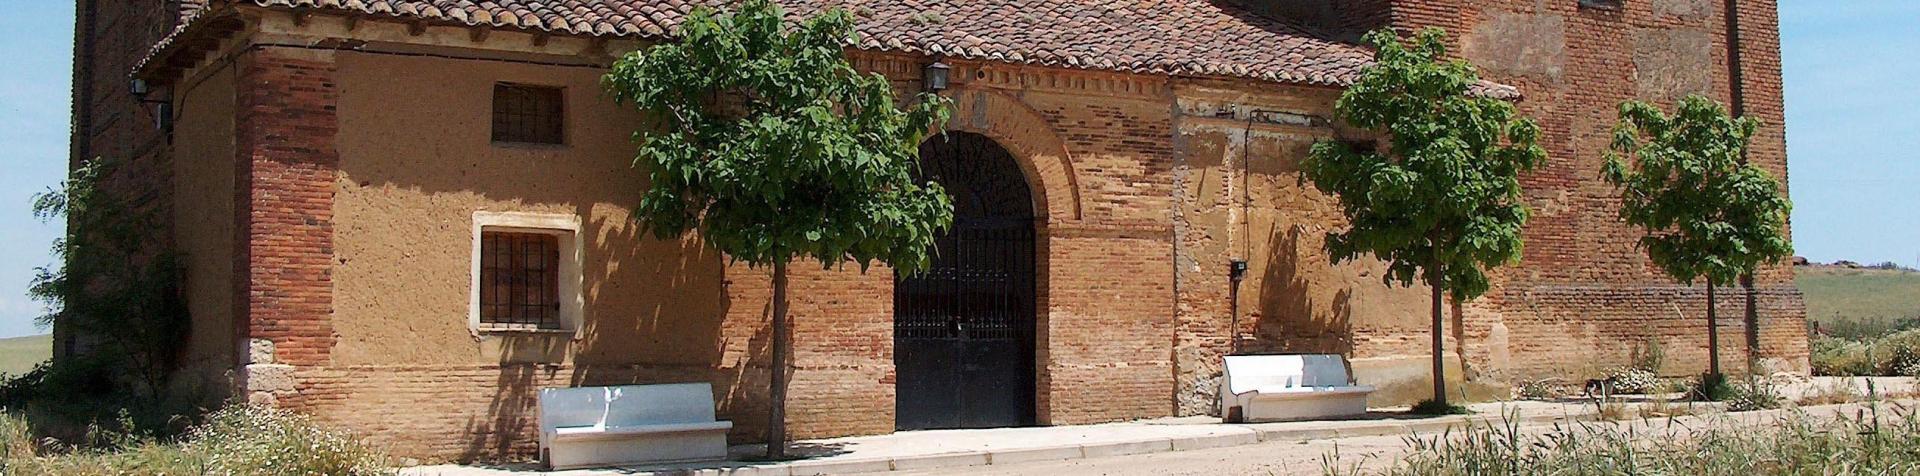 Iglesia de San Martín de Tours, Calzadilla de al Cueza